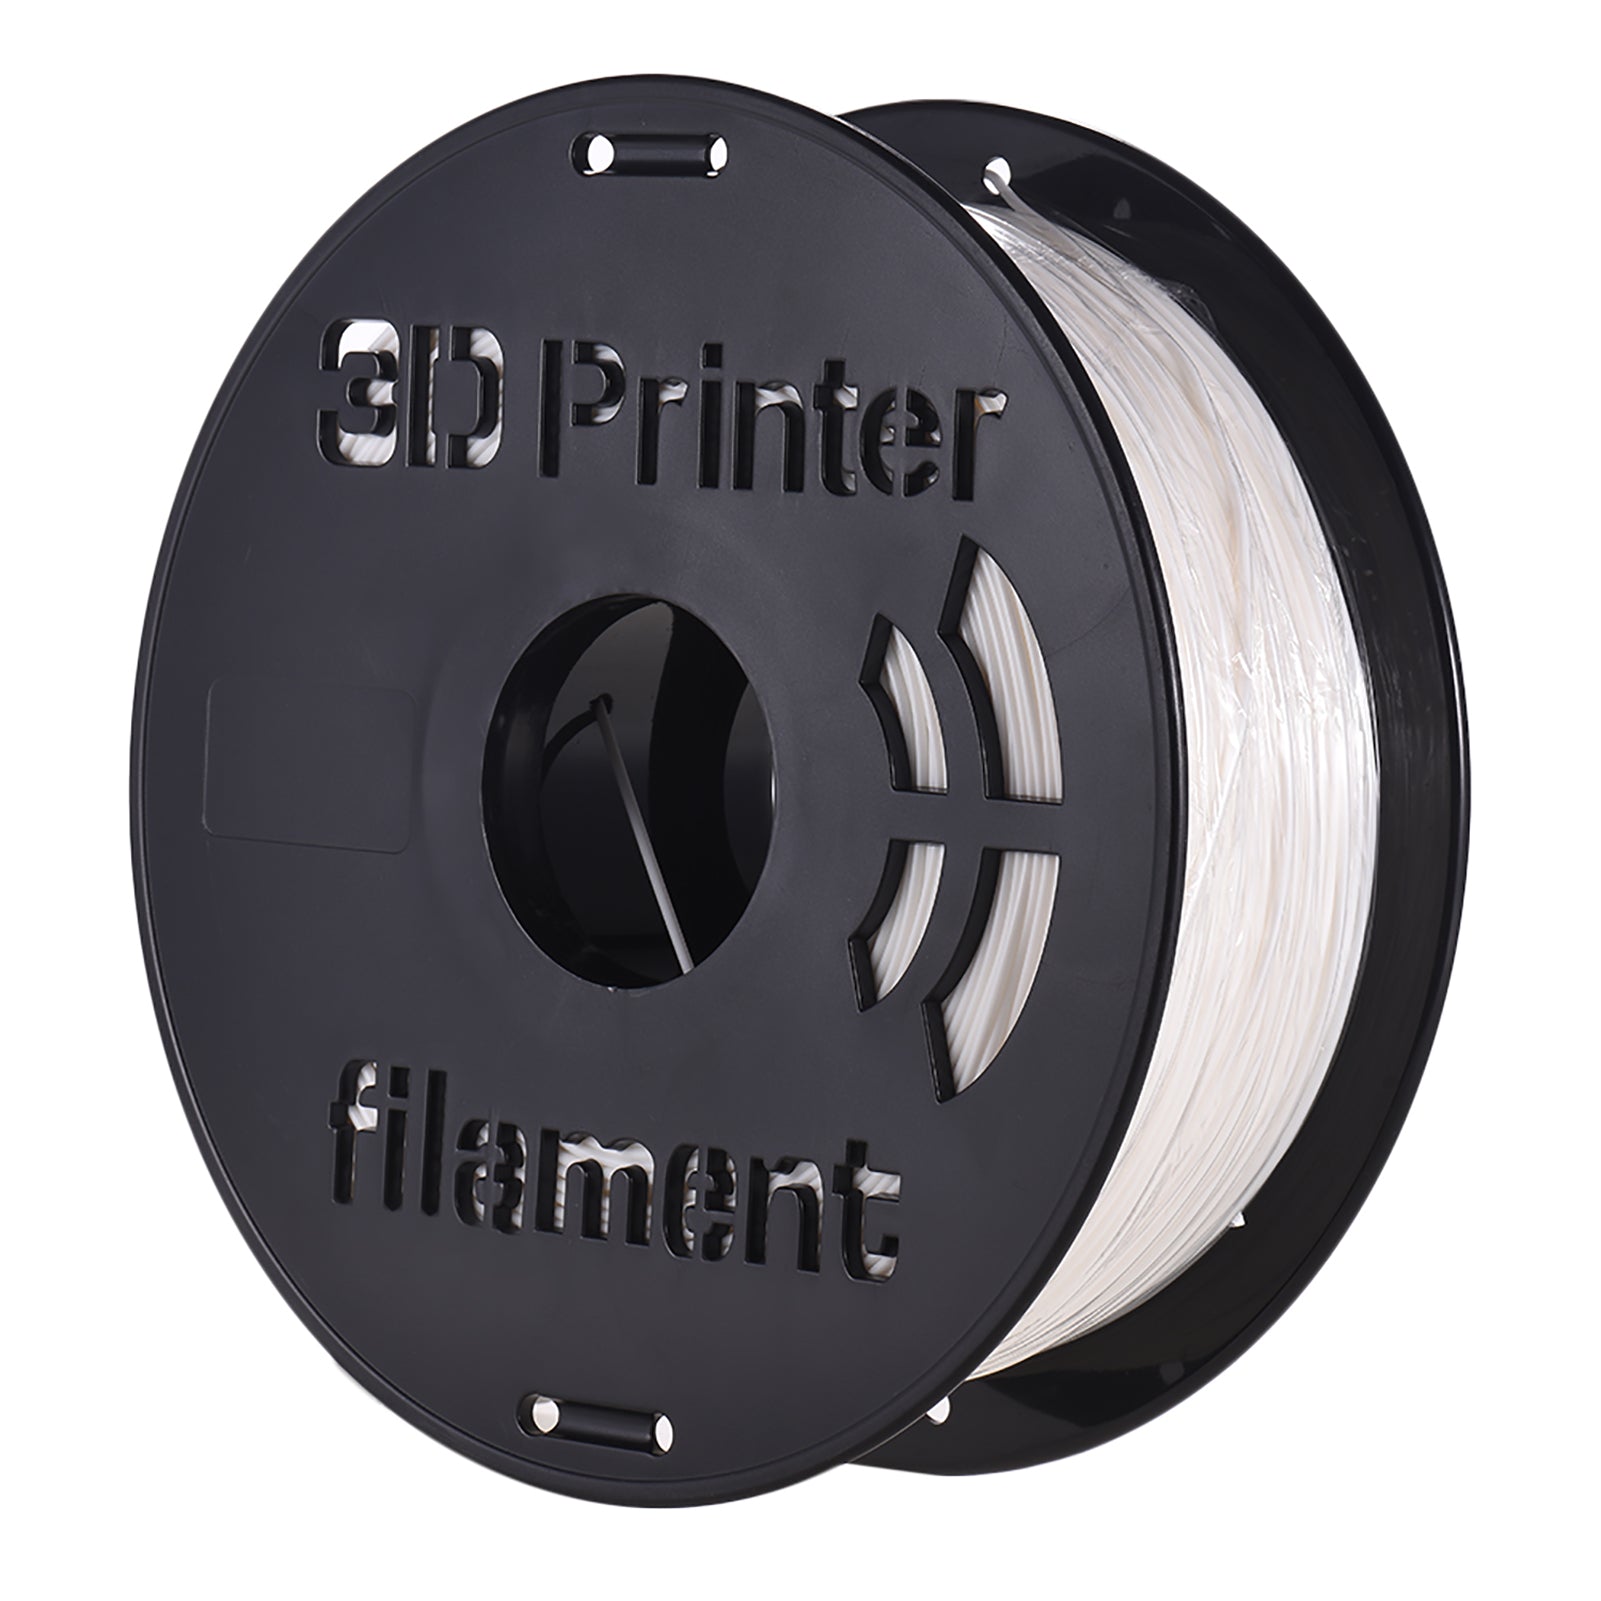 1KG Spool PC Polycarbonate Filament 1.75mm Diameter >240℃ Printing Temperature for 3D Printers Drawing Pens Supplies